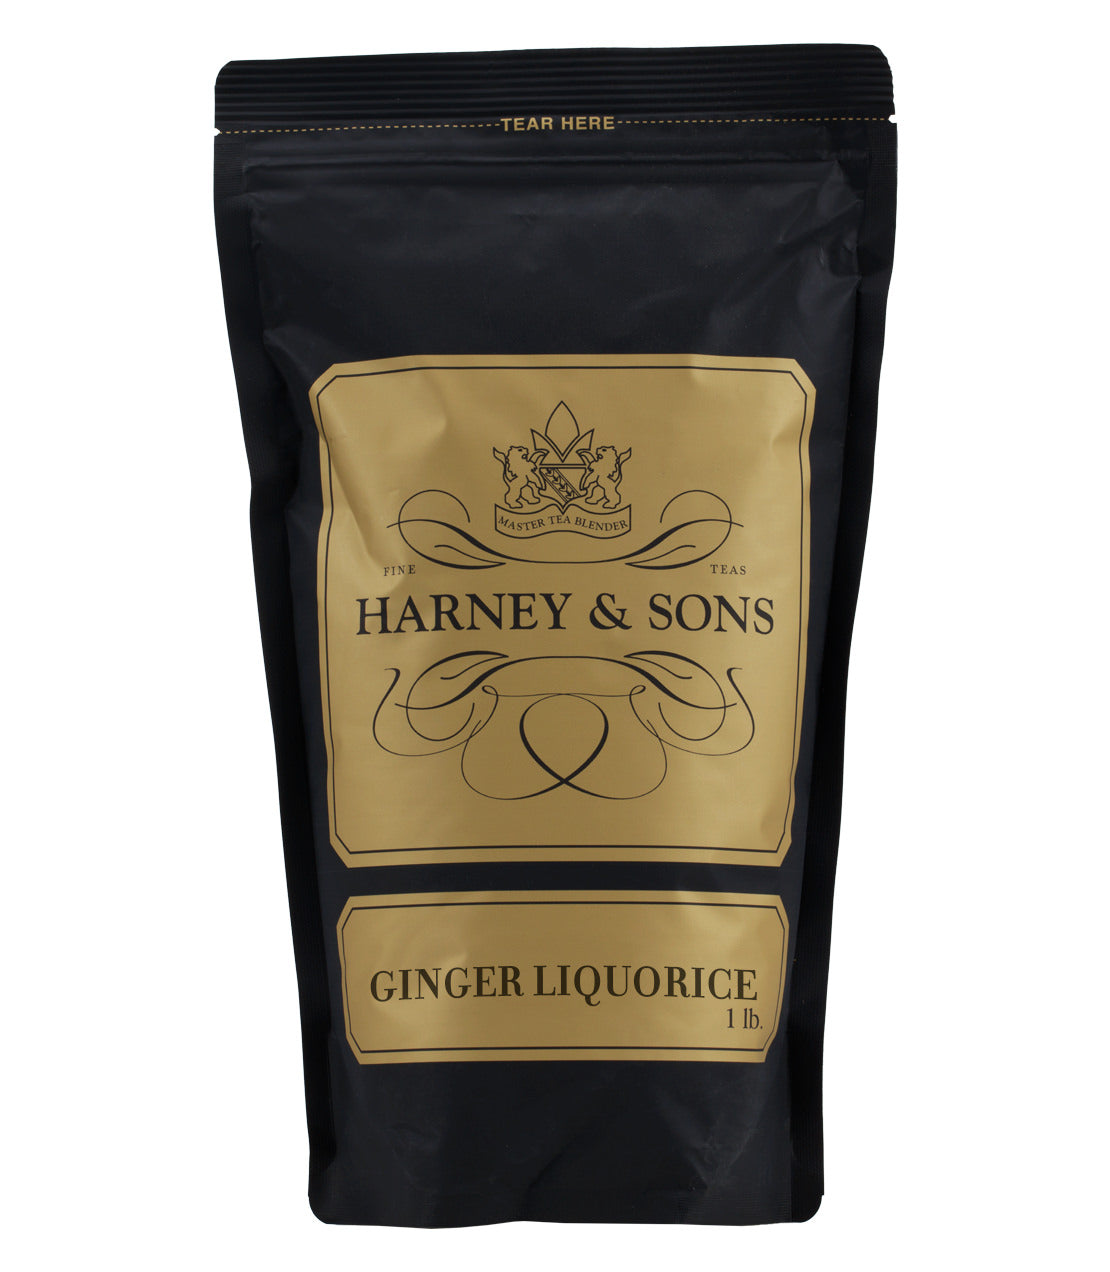 Ginger Liquorice - Loose 1 lb. Bag - Harney & Sons Fine Teas